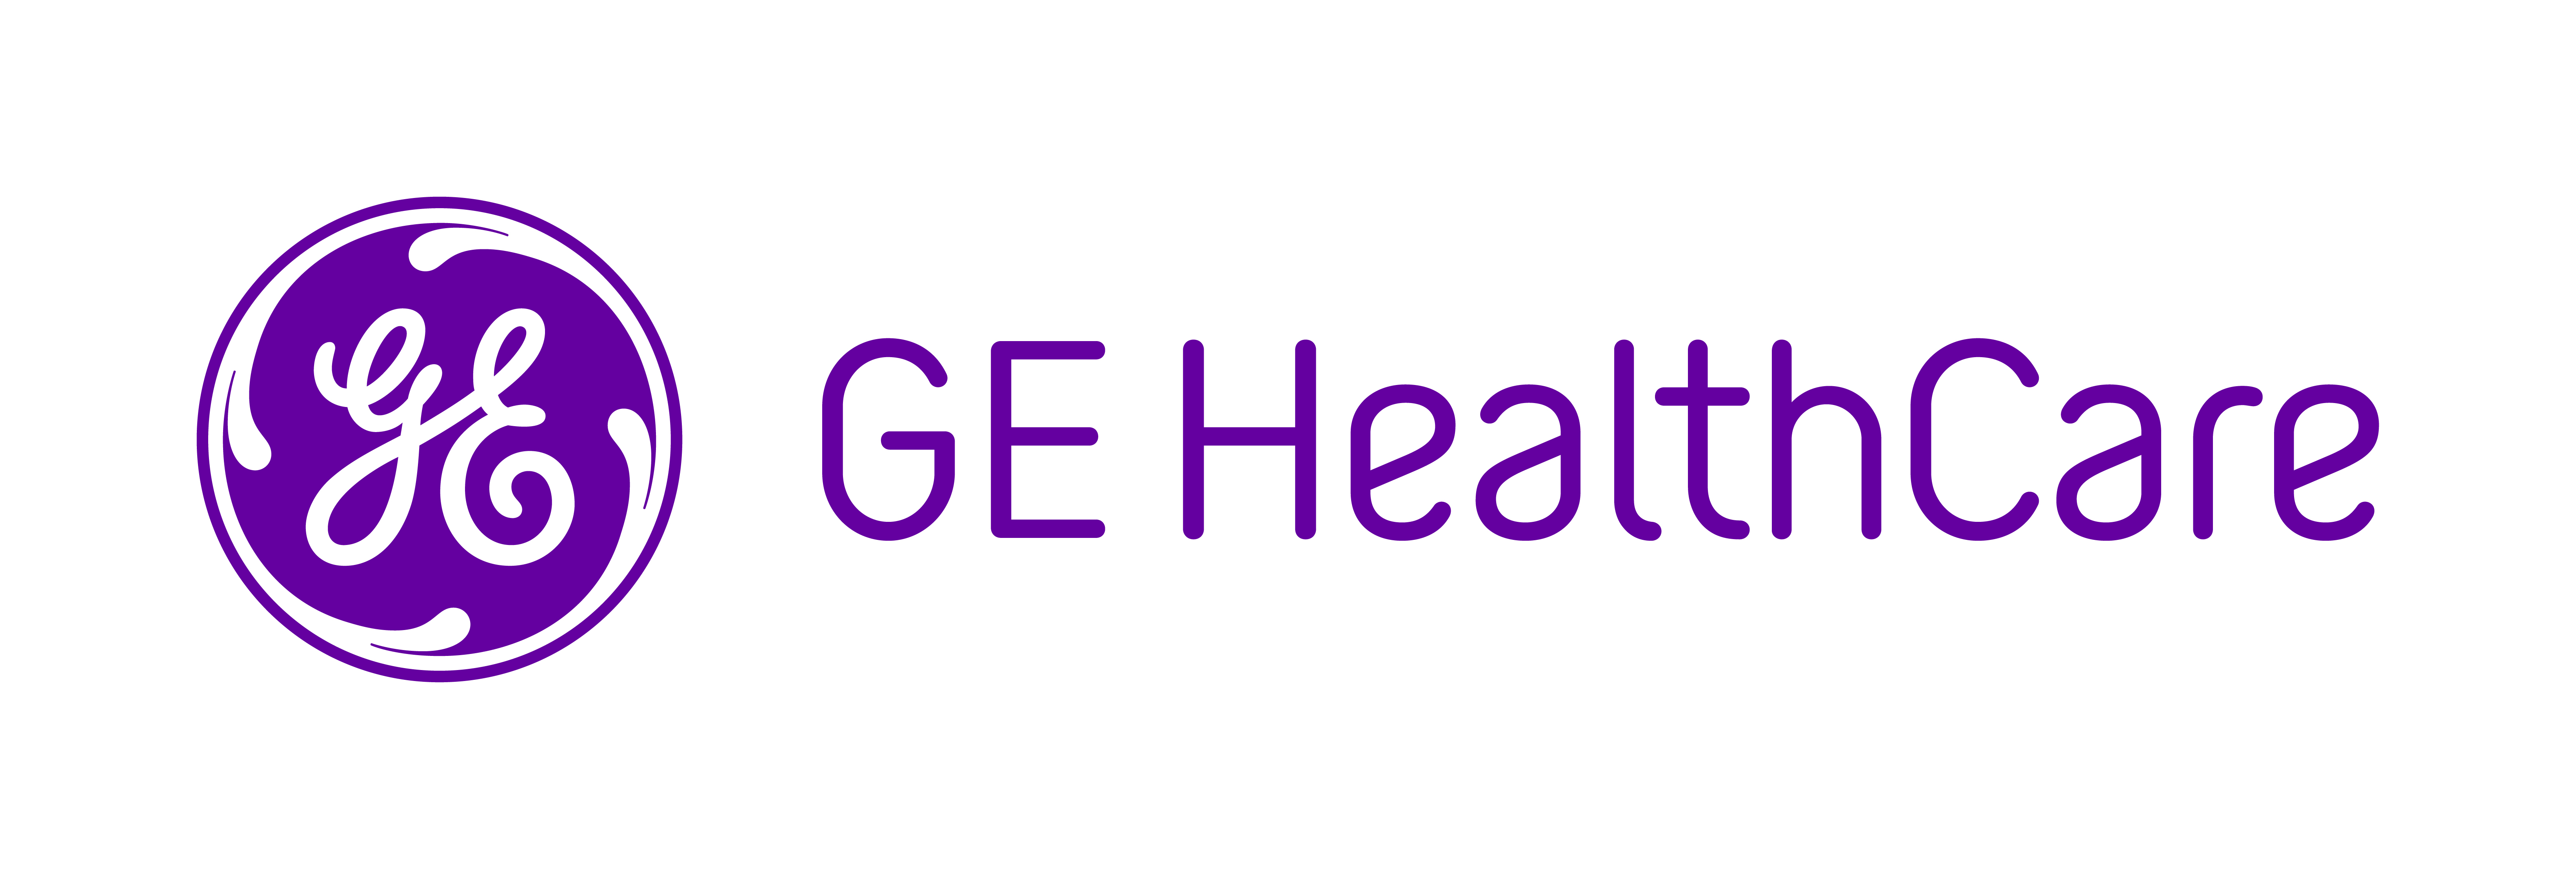 GE
General Electric Healthcare